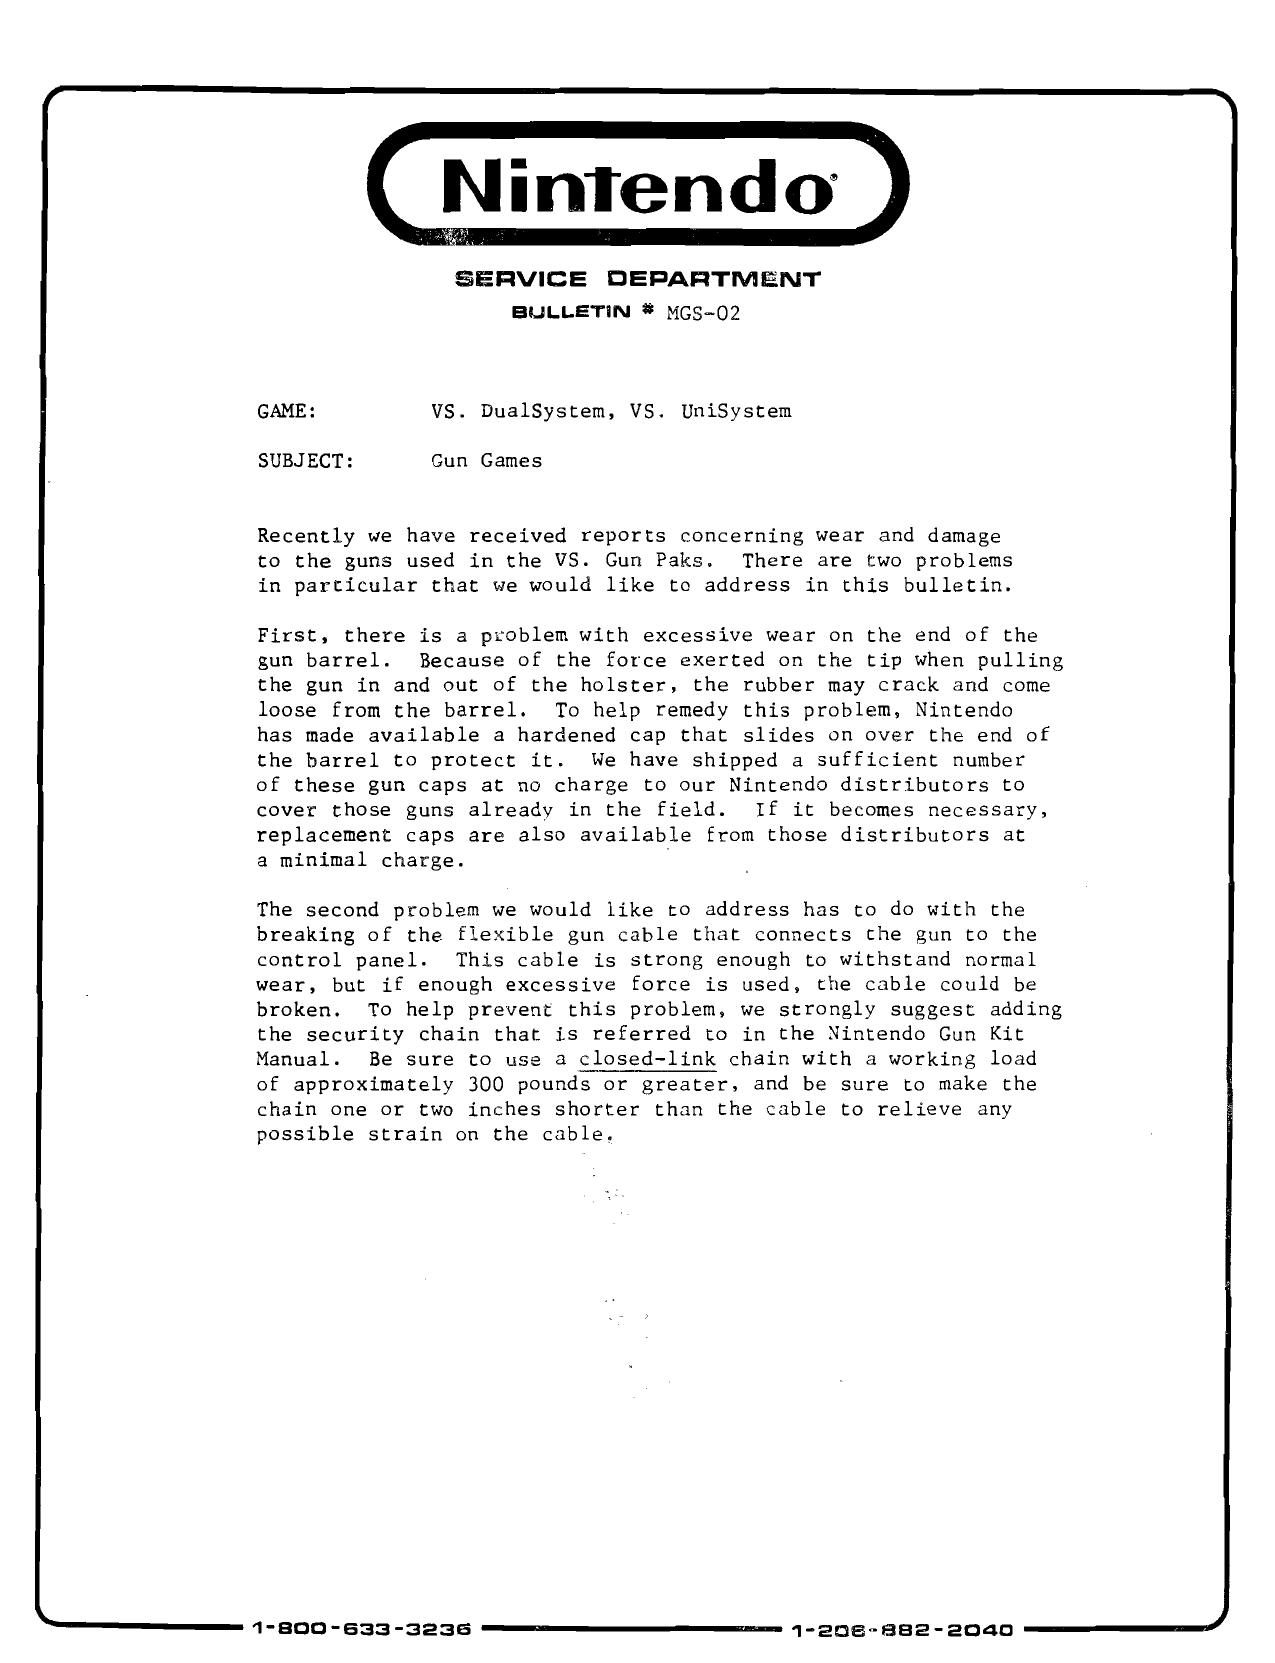 Nintendo Bulletin Gun Games (MGS-02)